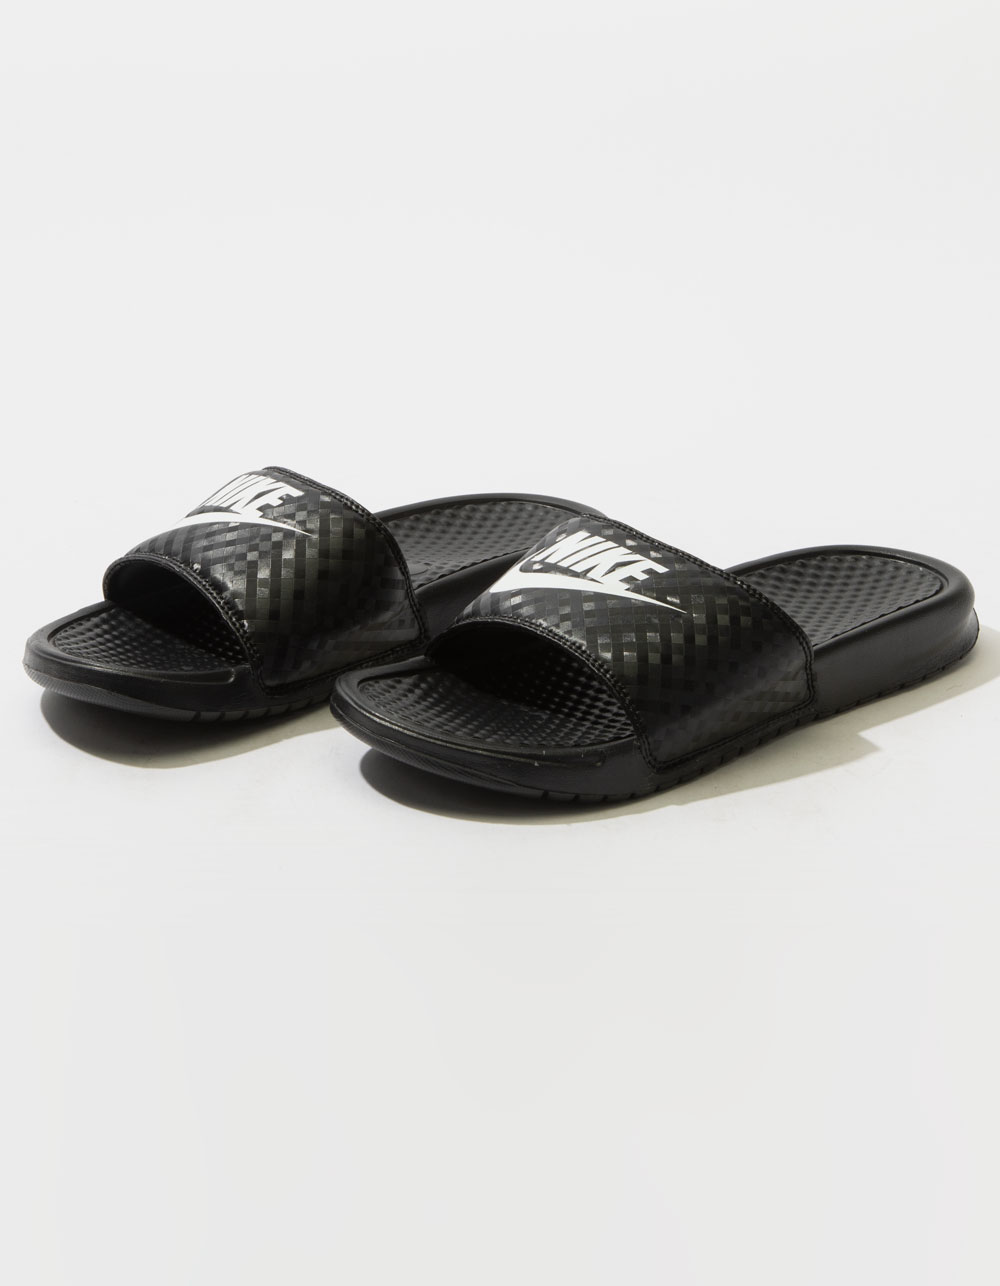 NIKE Benassi JDI Womens Slide Sandals - BLACK Tillys